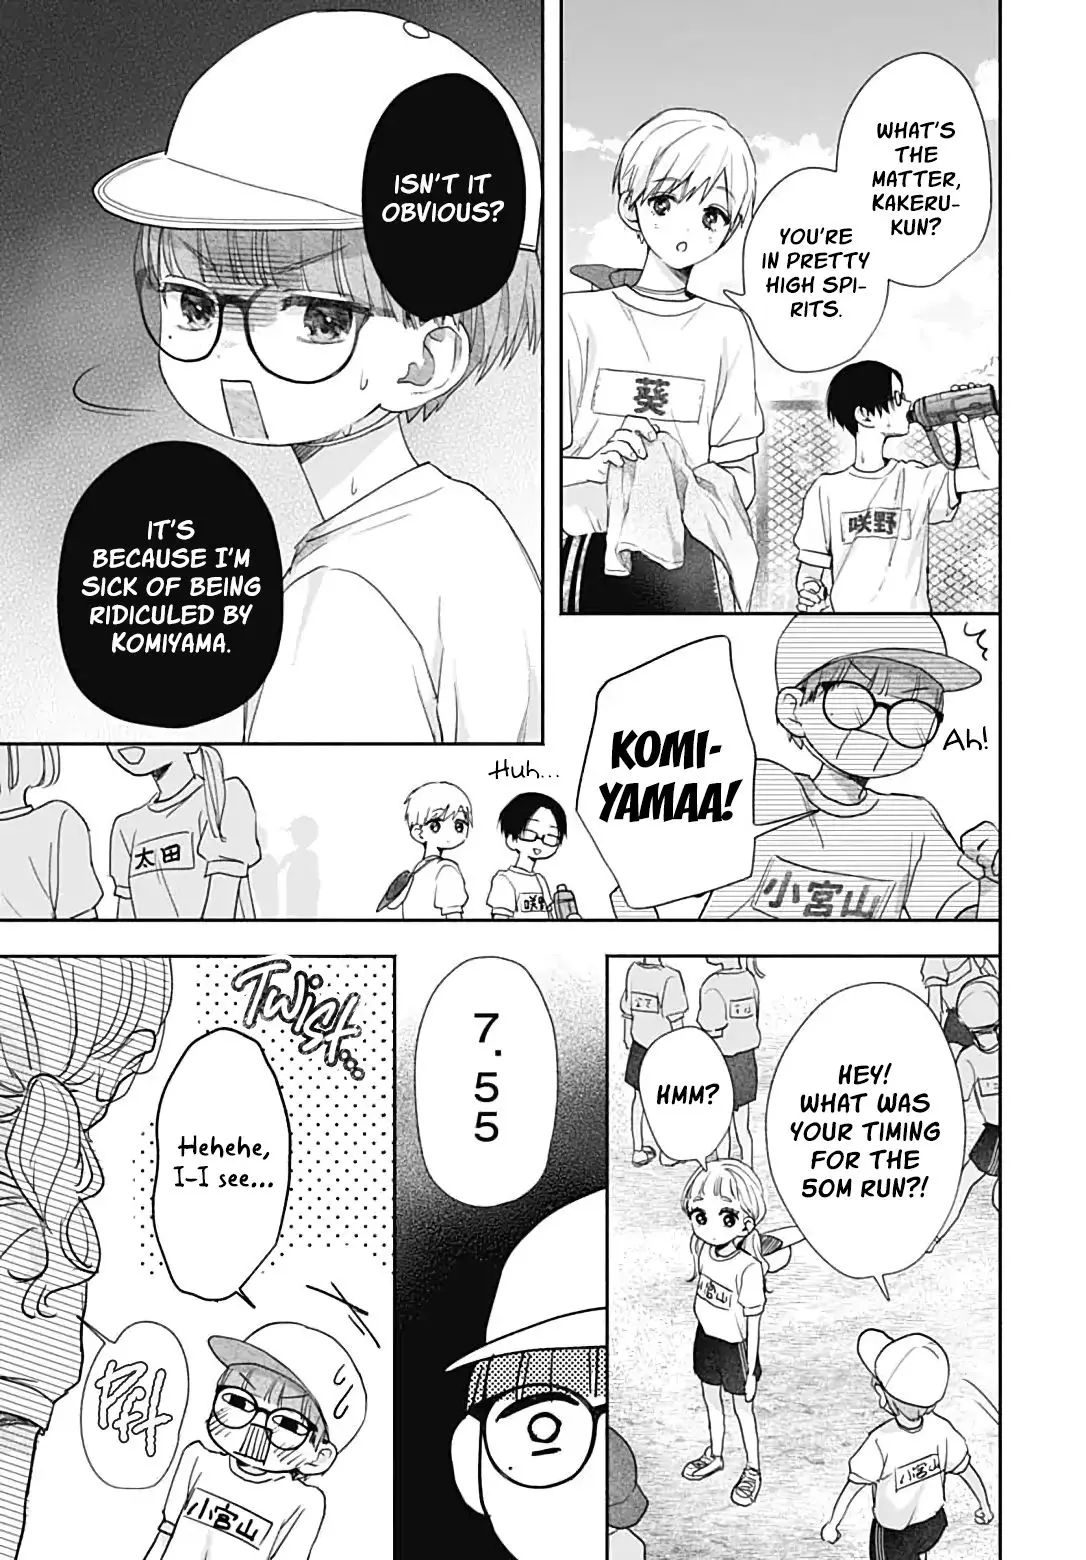 I Hate Komiyama - 1 page 20-ae64219e